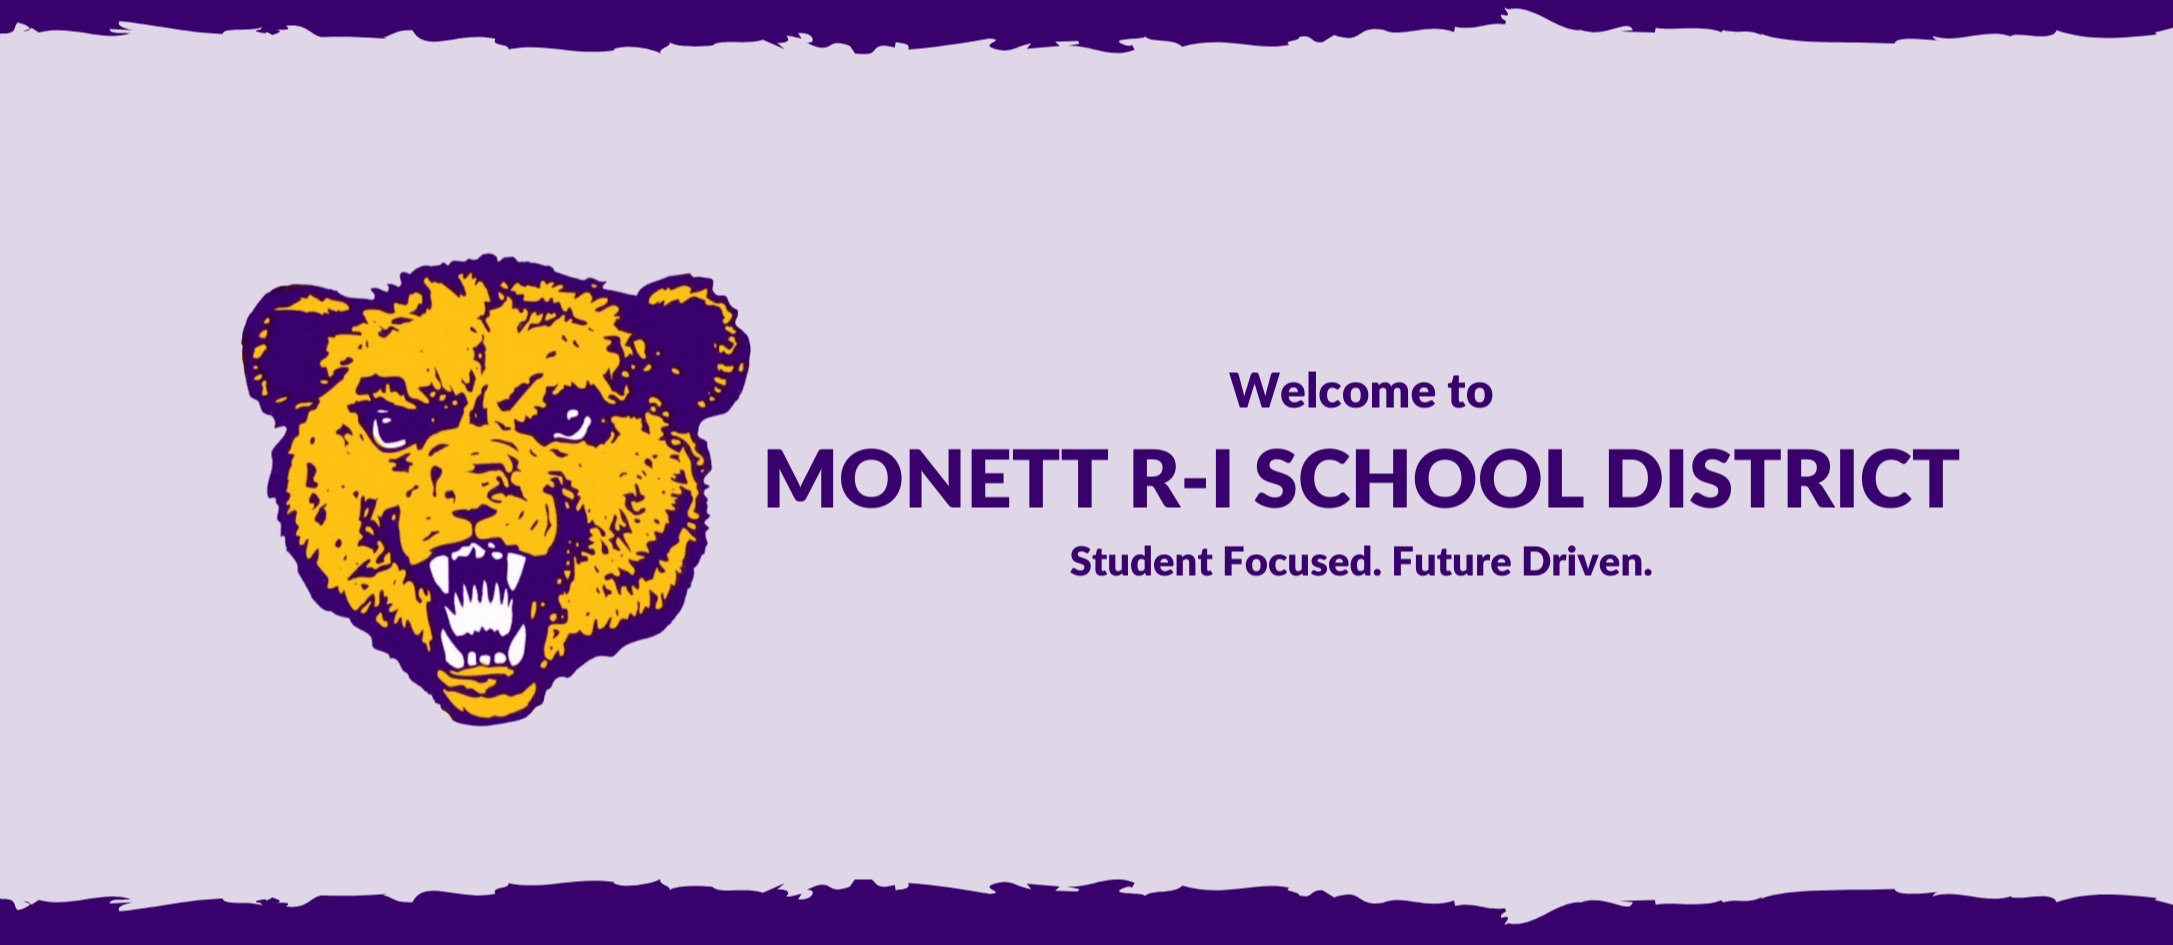 monett-r-1-school-district-student-focused-future-driven